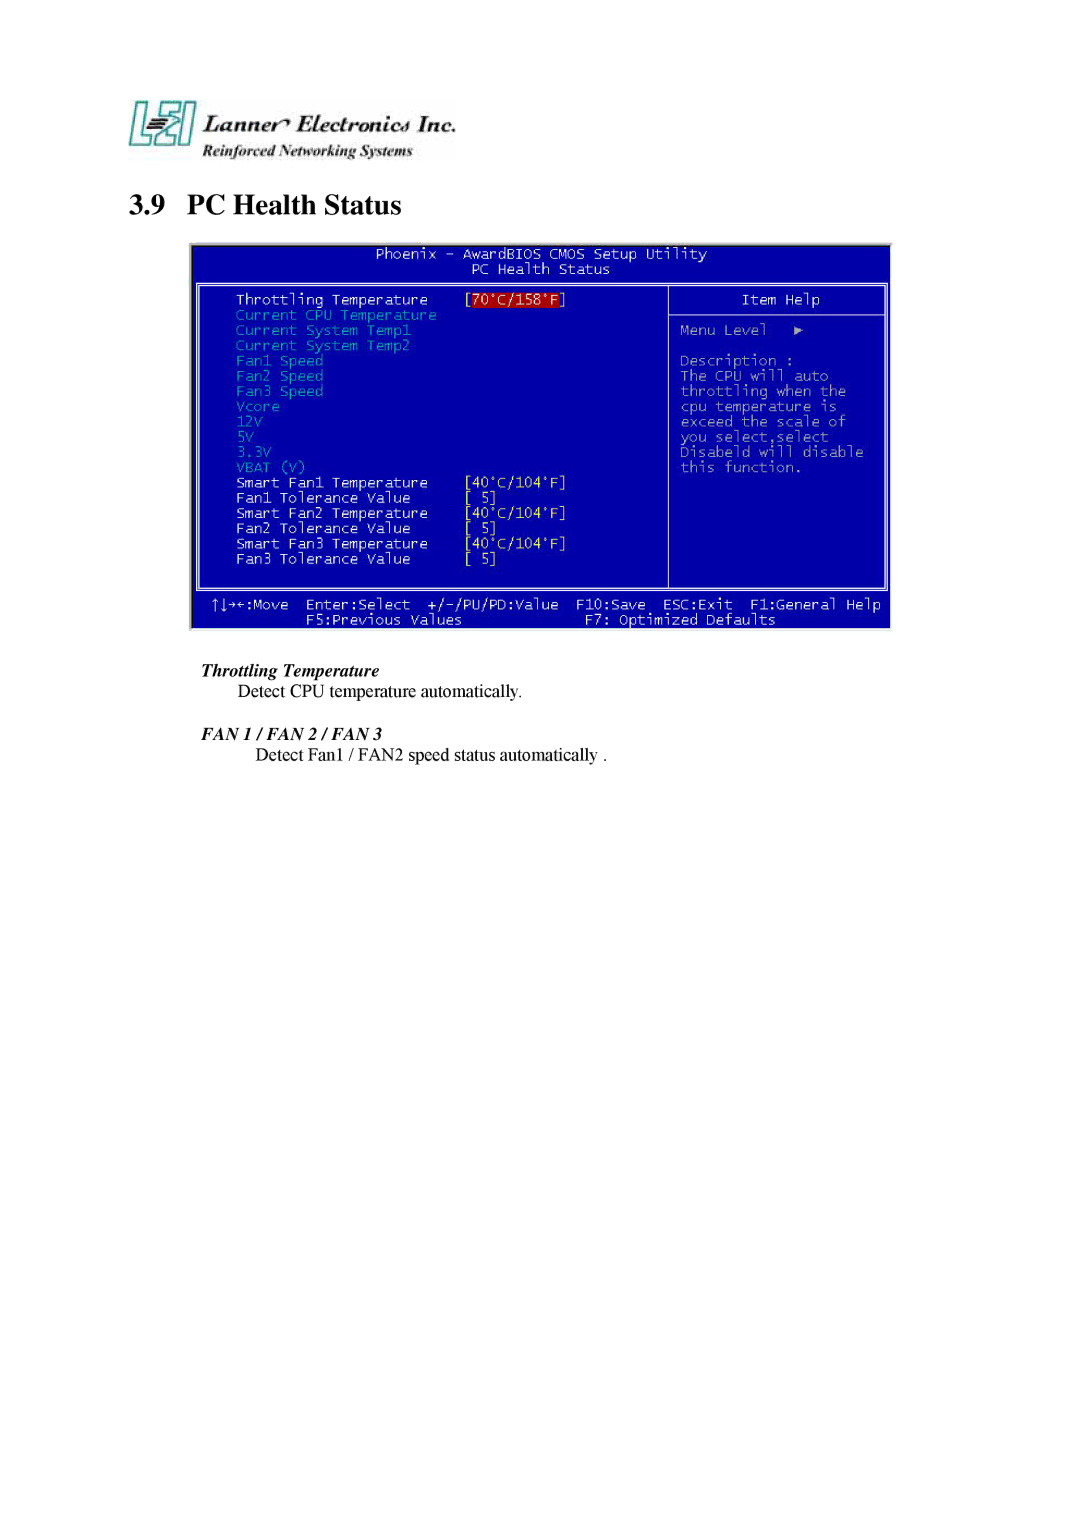 Lanner electronic 19" 1U Intel Pentium 4 Socket T Rackmount Network Security Platform, FW-7870 user manual PC Health Status 